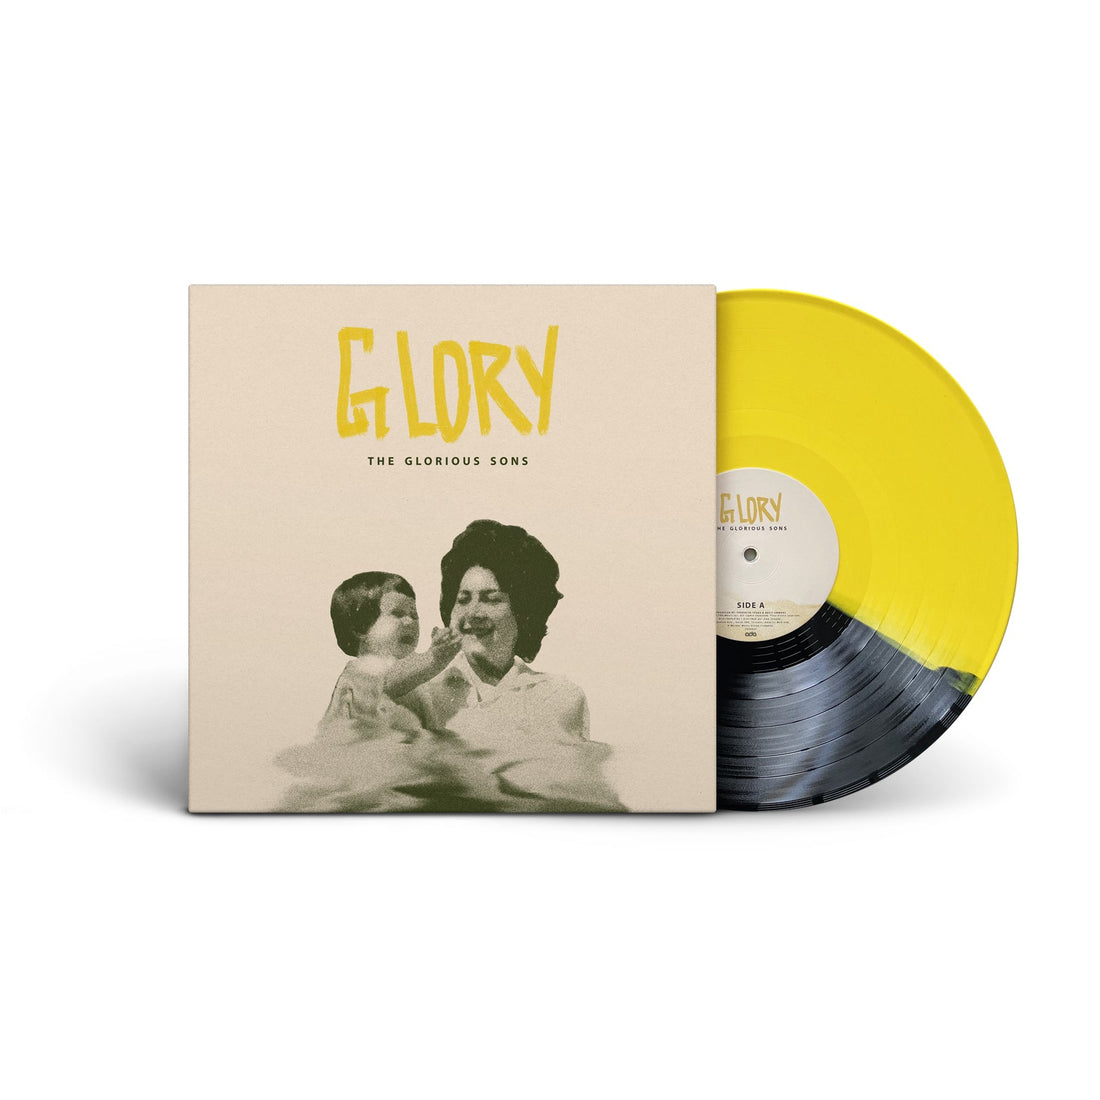 The Glorious Sons - Glory - Vinyl - Yellow / Black